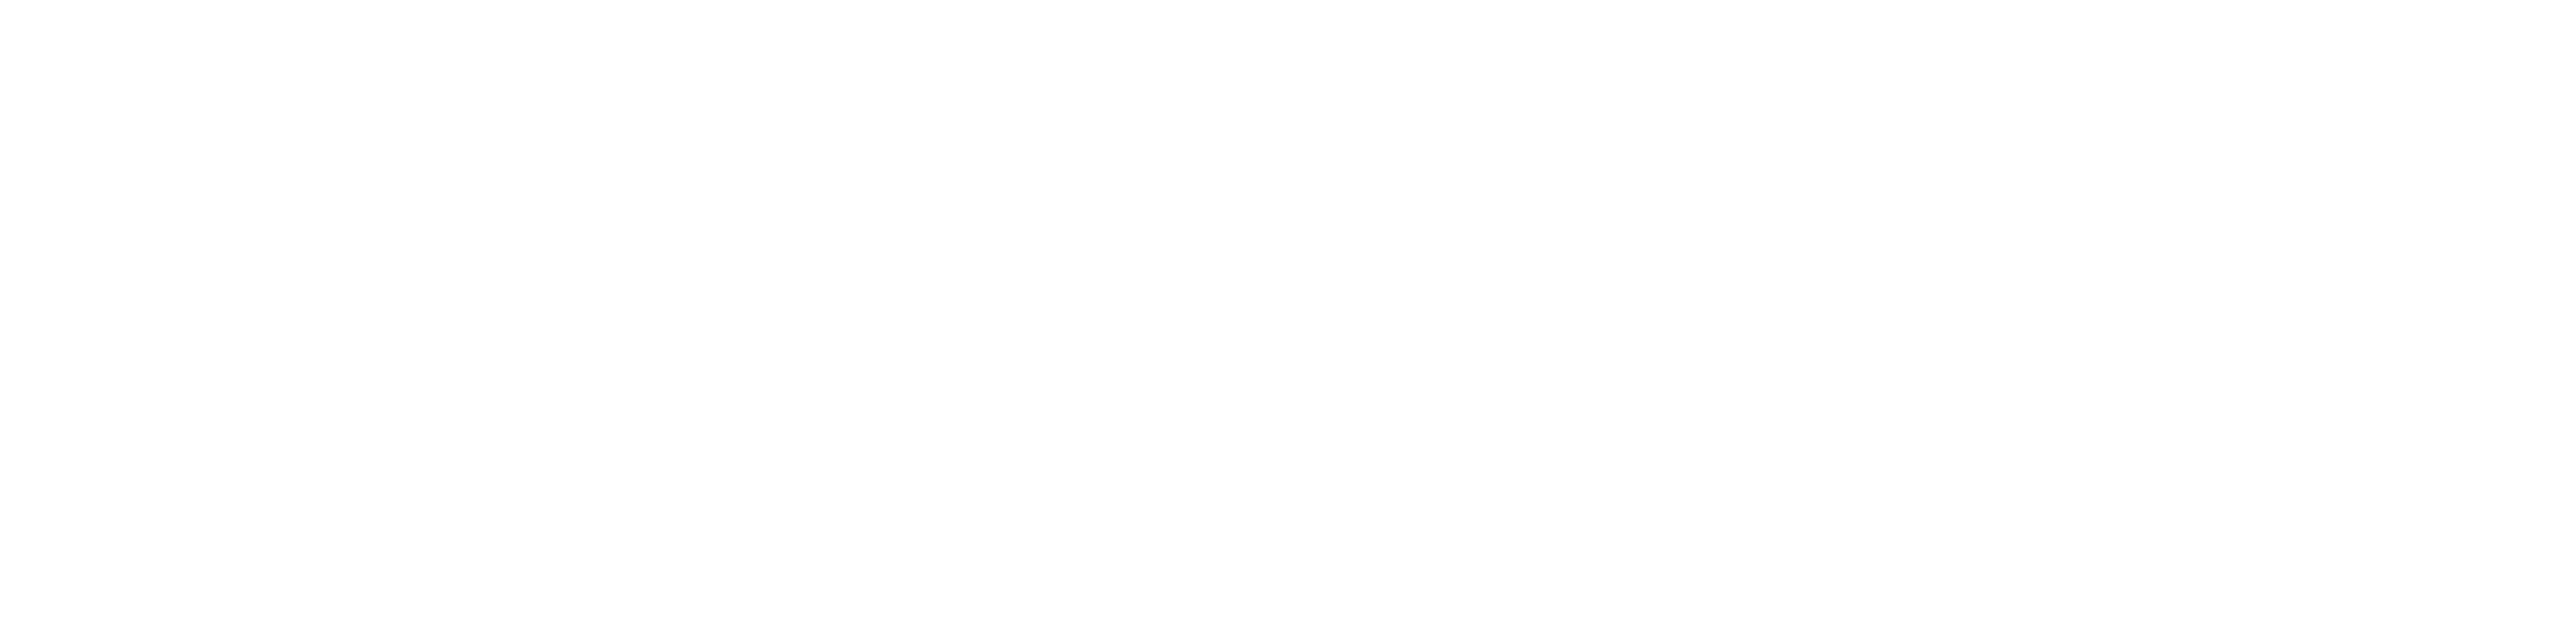 HCW HOSPITALITY